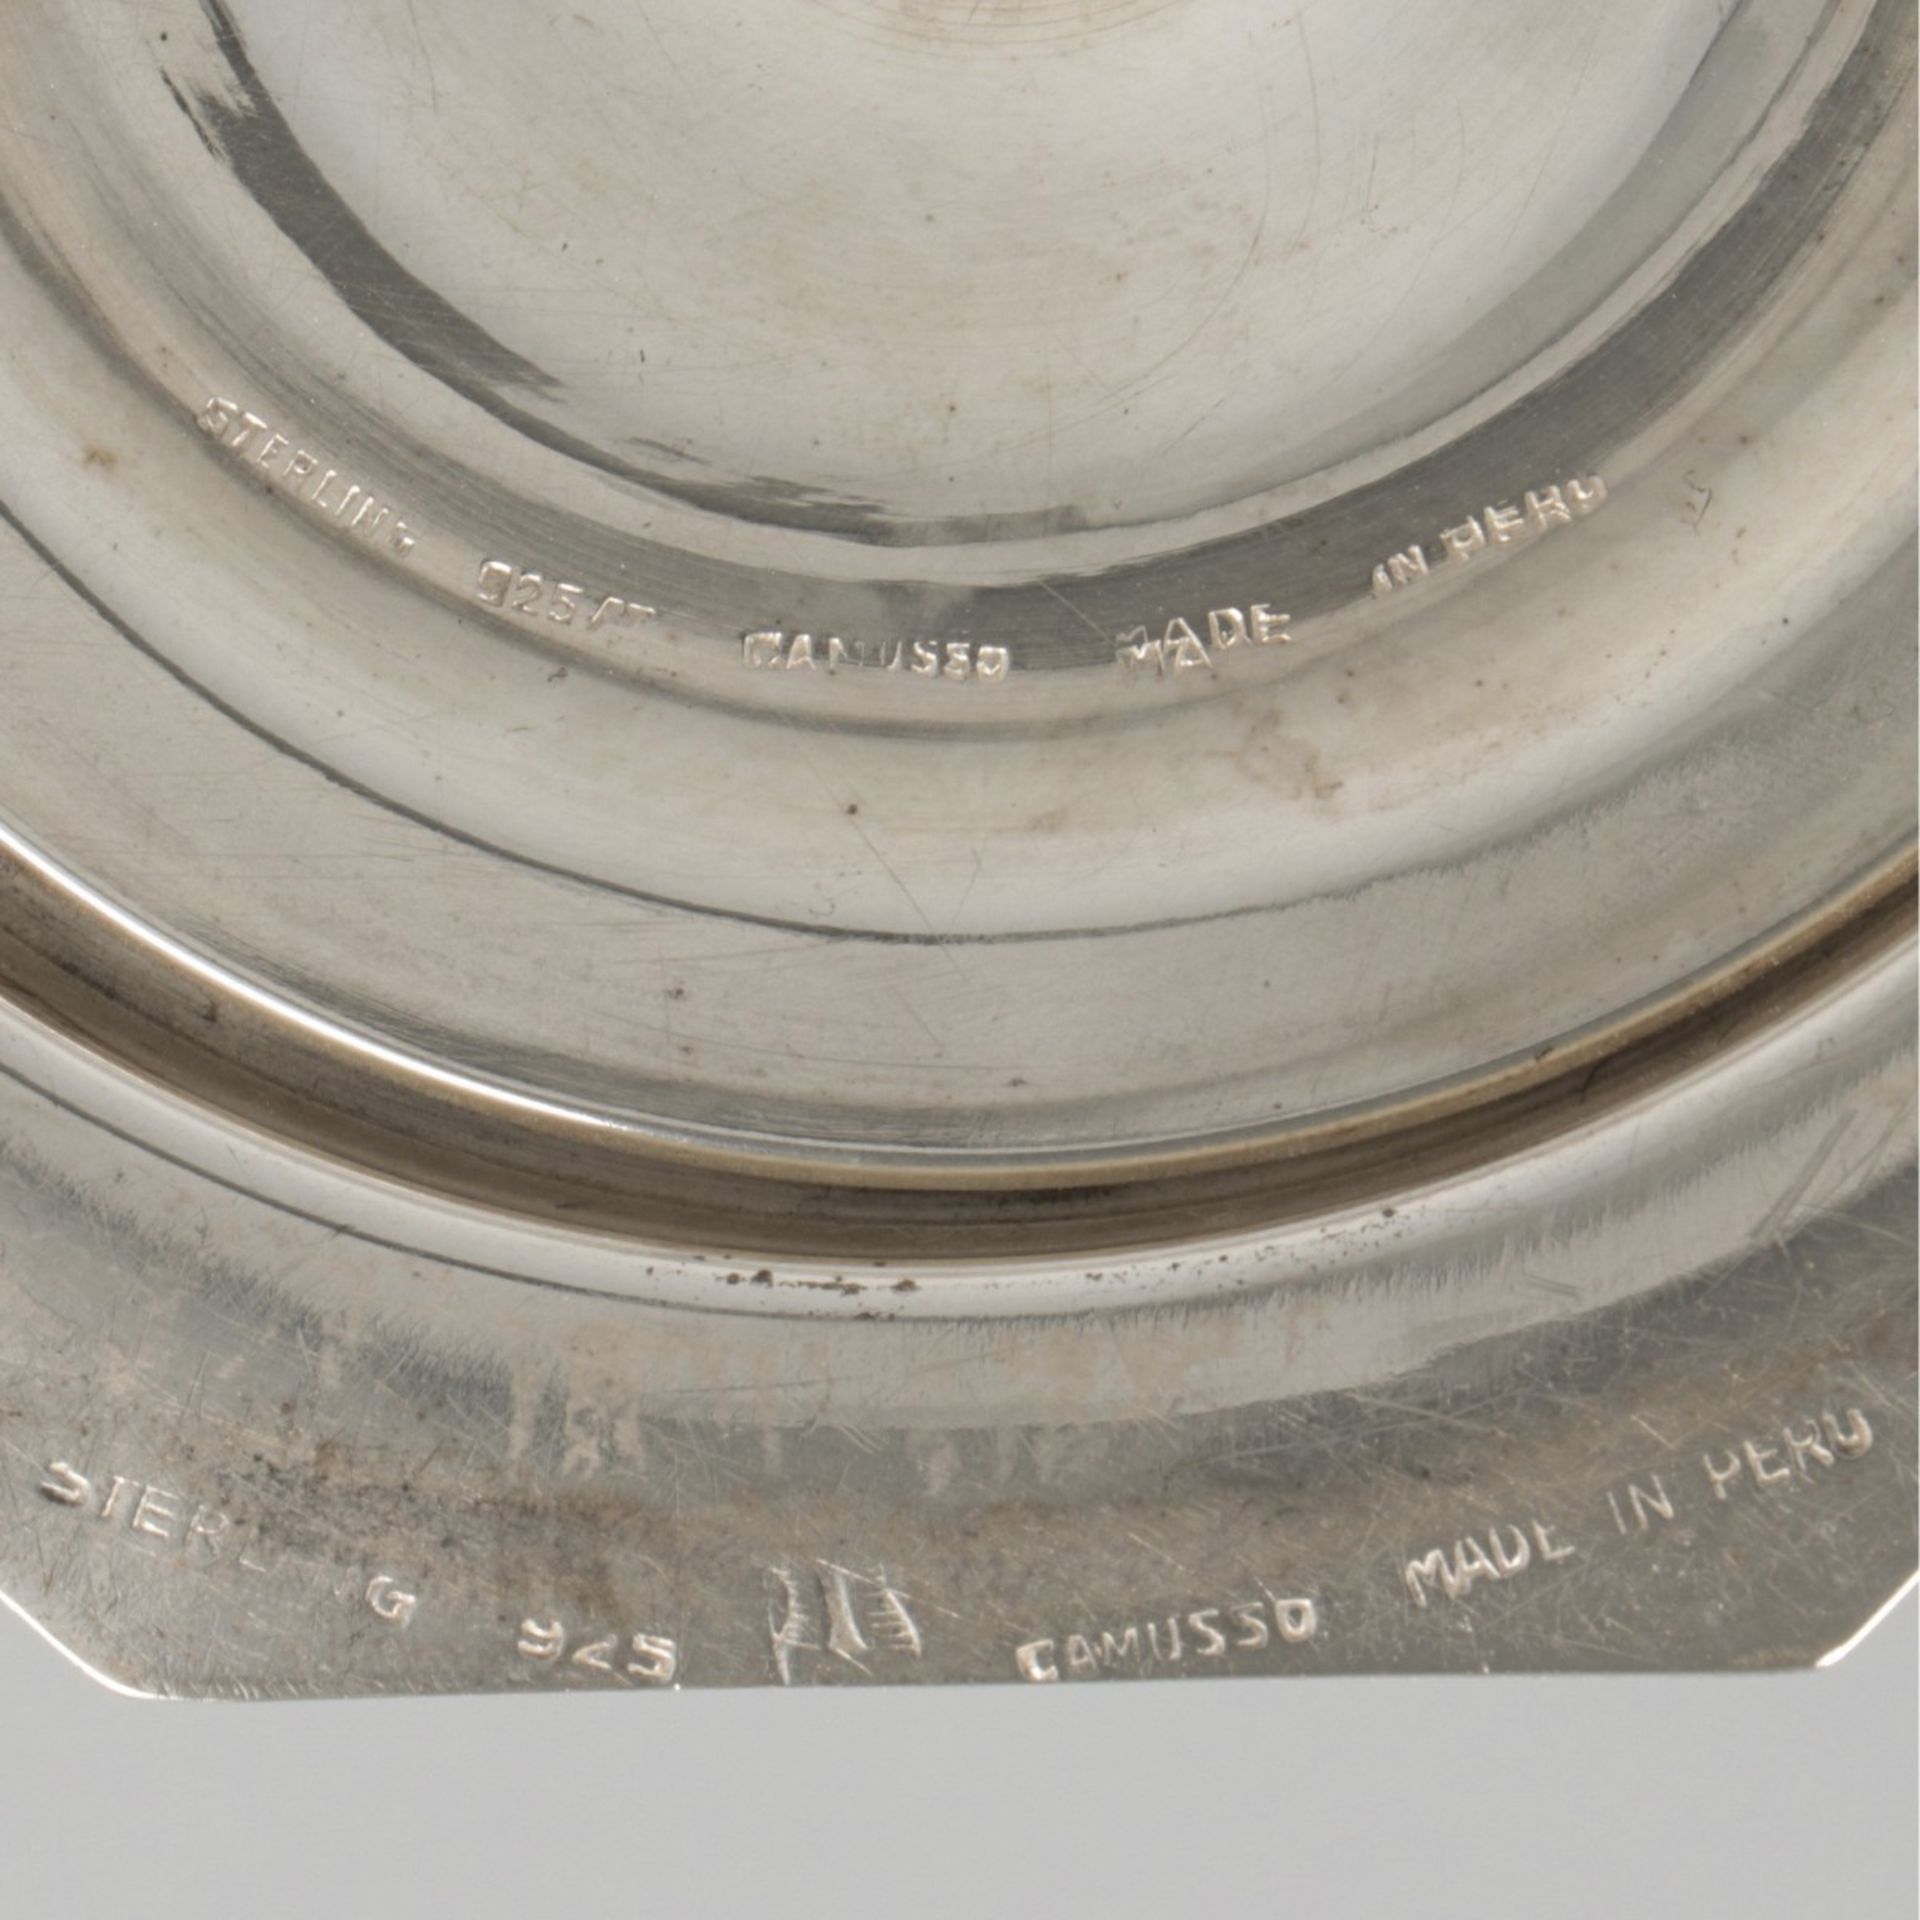 Candlestick (Lima, Peru, Carlo Mario Camusso) silver. - Image 7 of 7